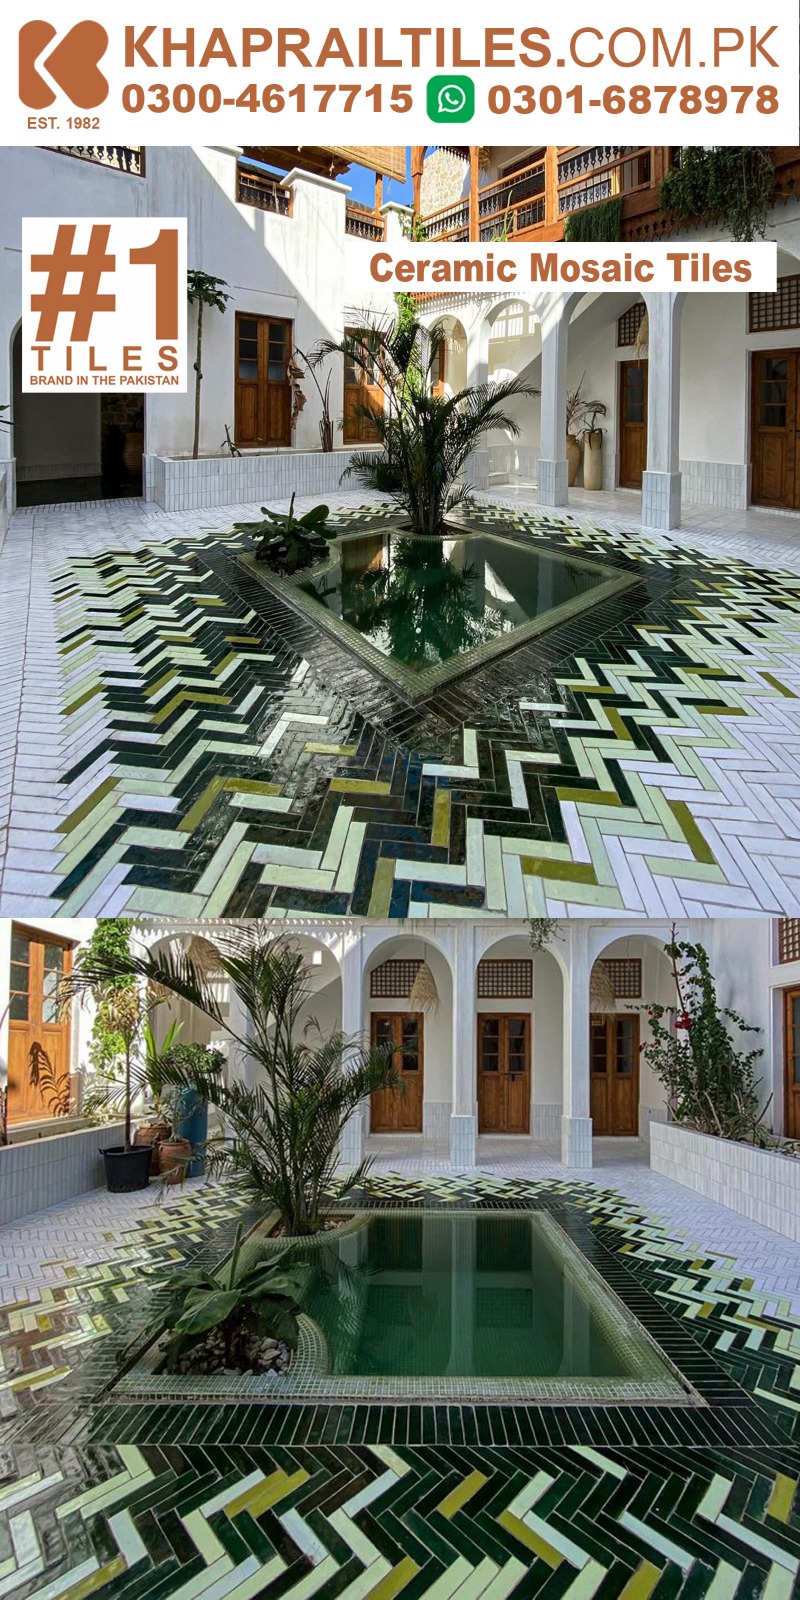 34 Khaprail rectangular moroccan mosaic tiles colors green black white